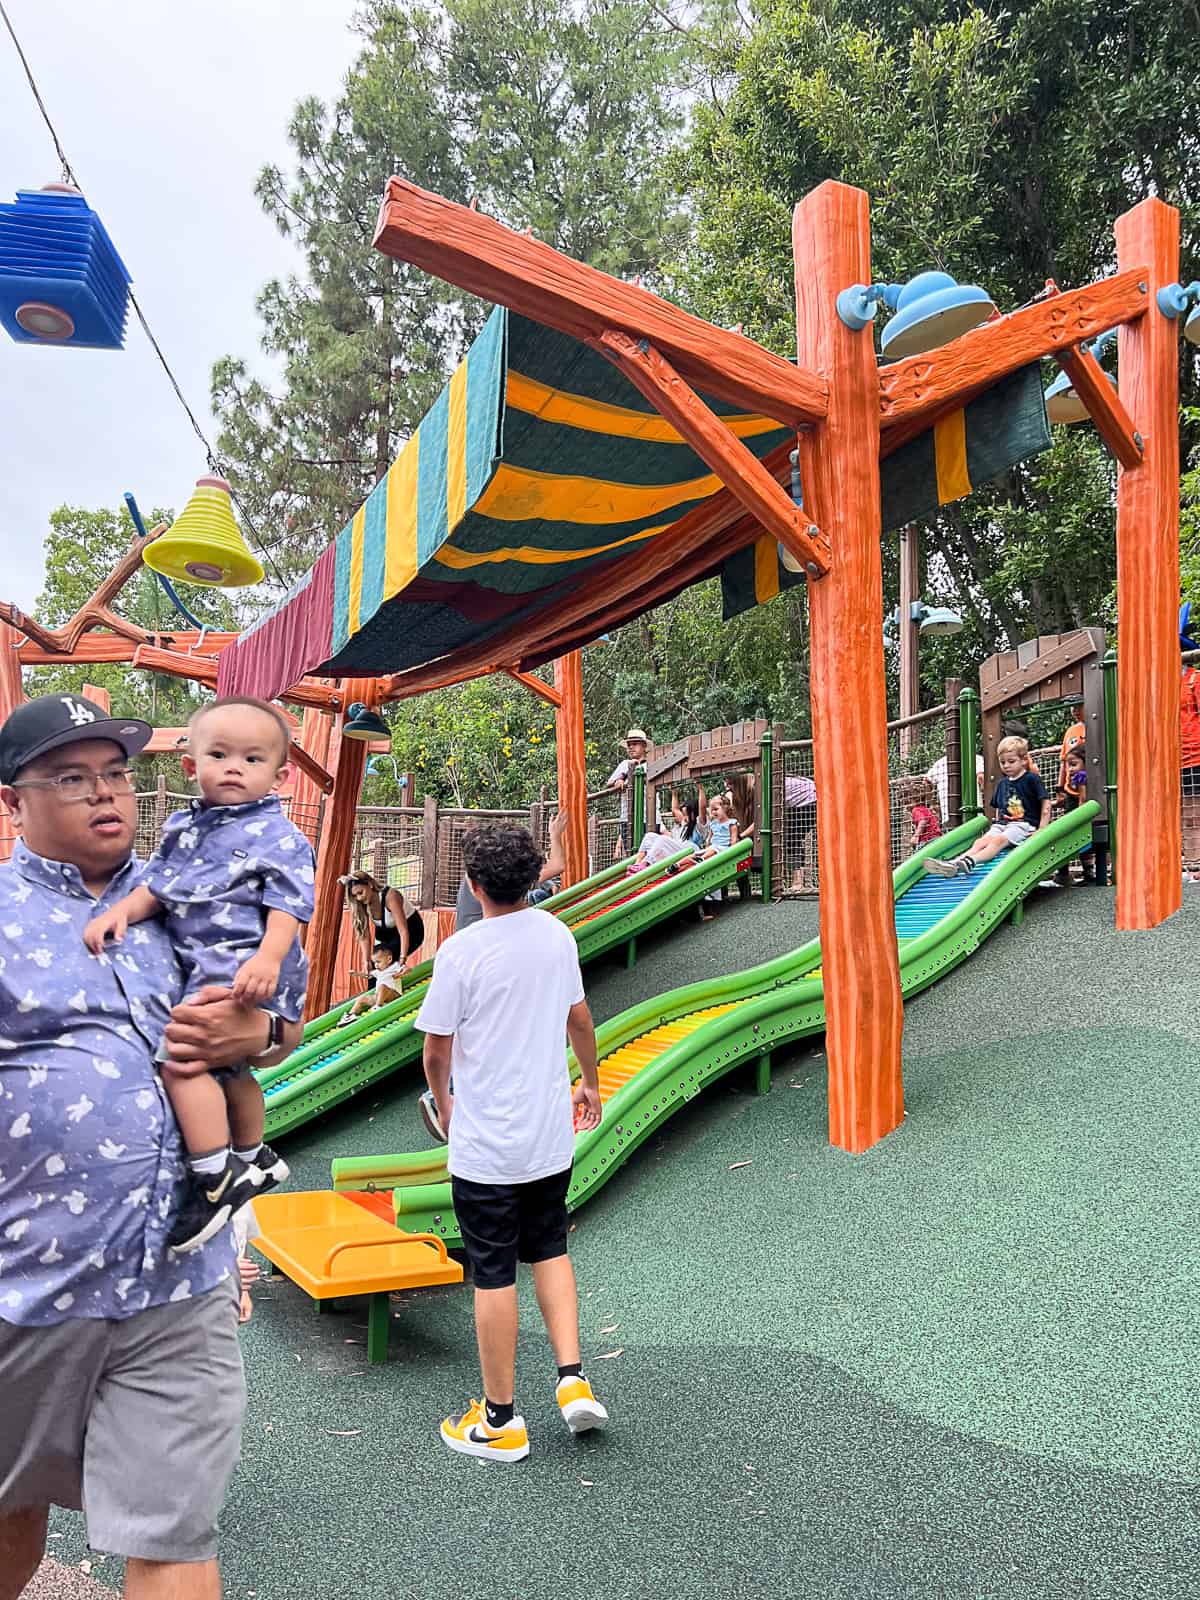 Disneyland playground slides at Mickey's Toontown with kids